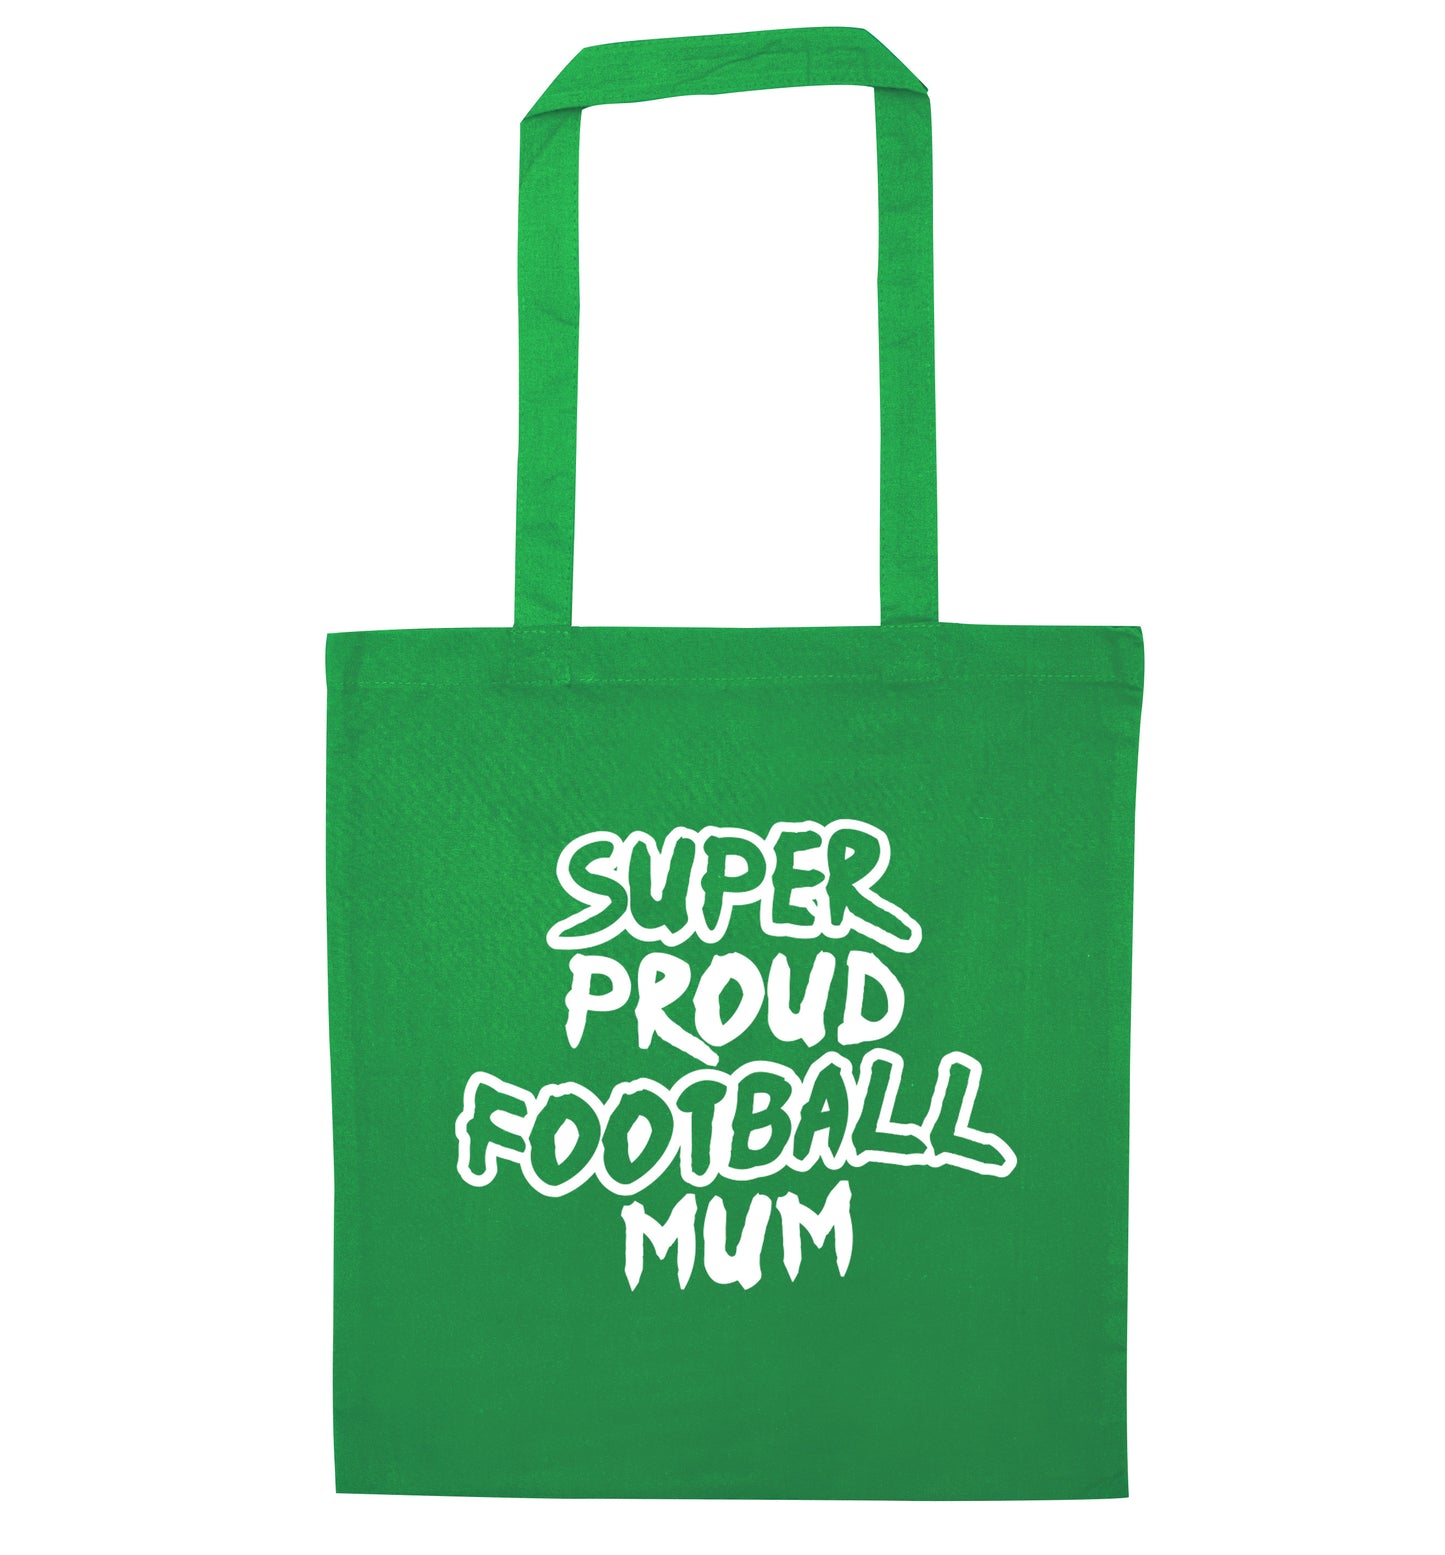 Super proud football mum green tote bag